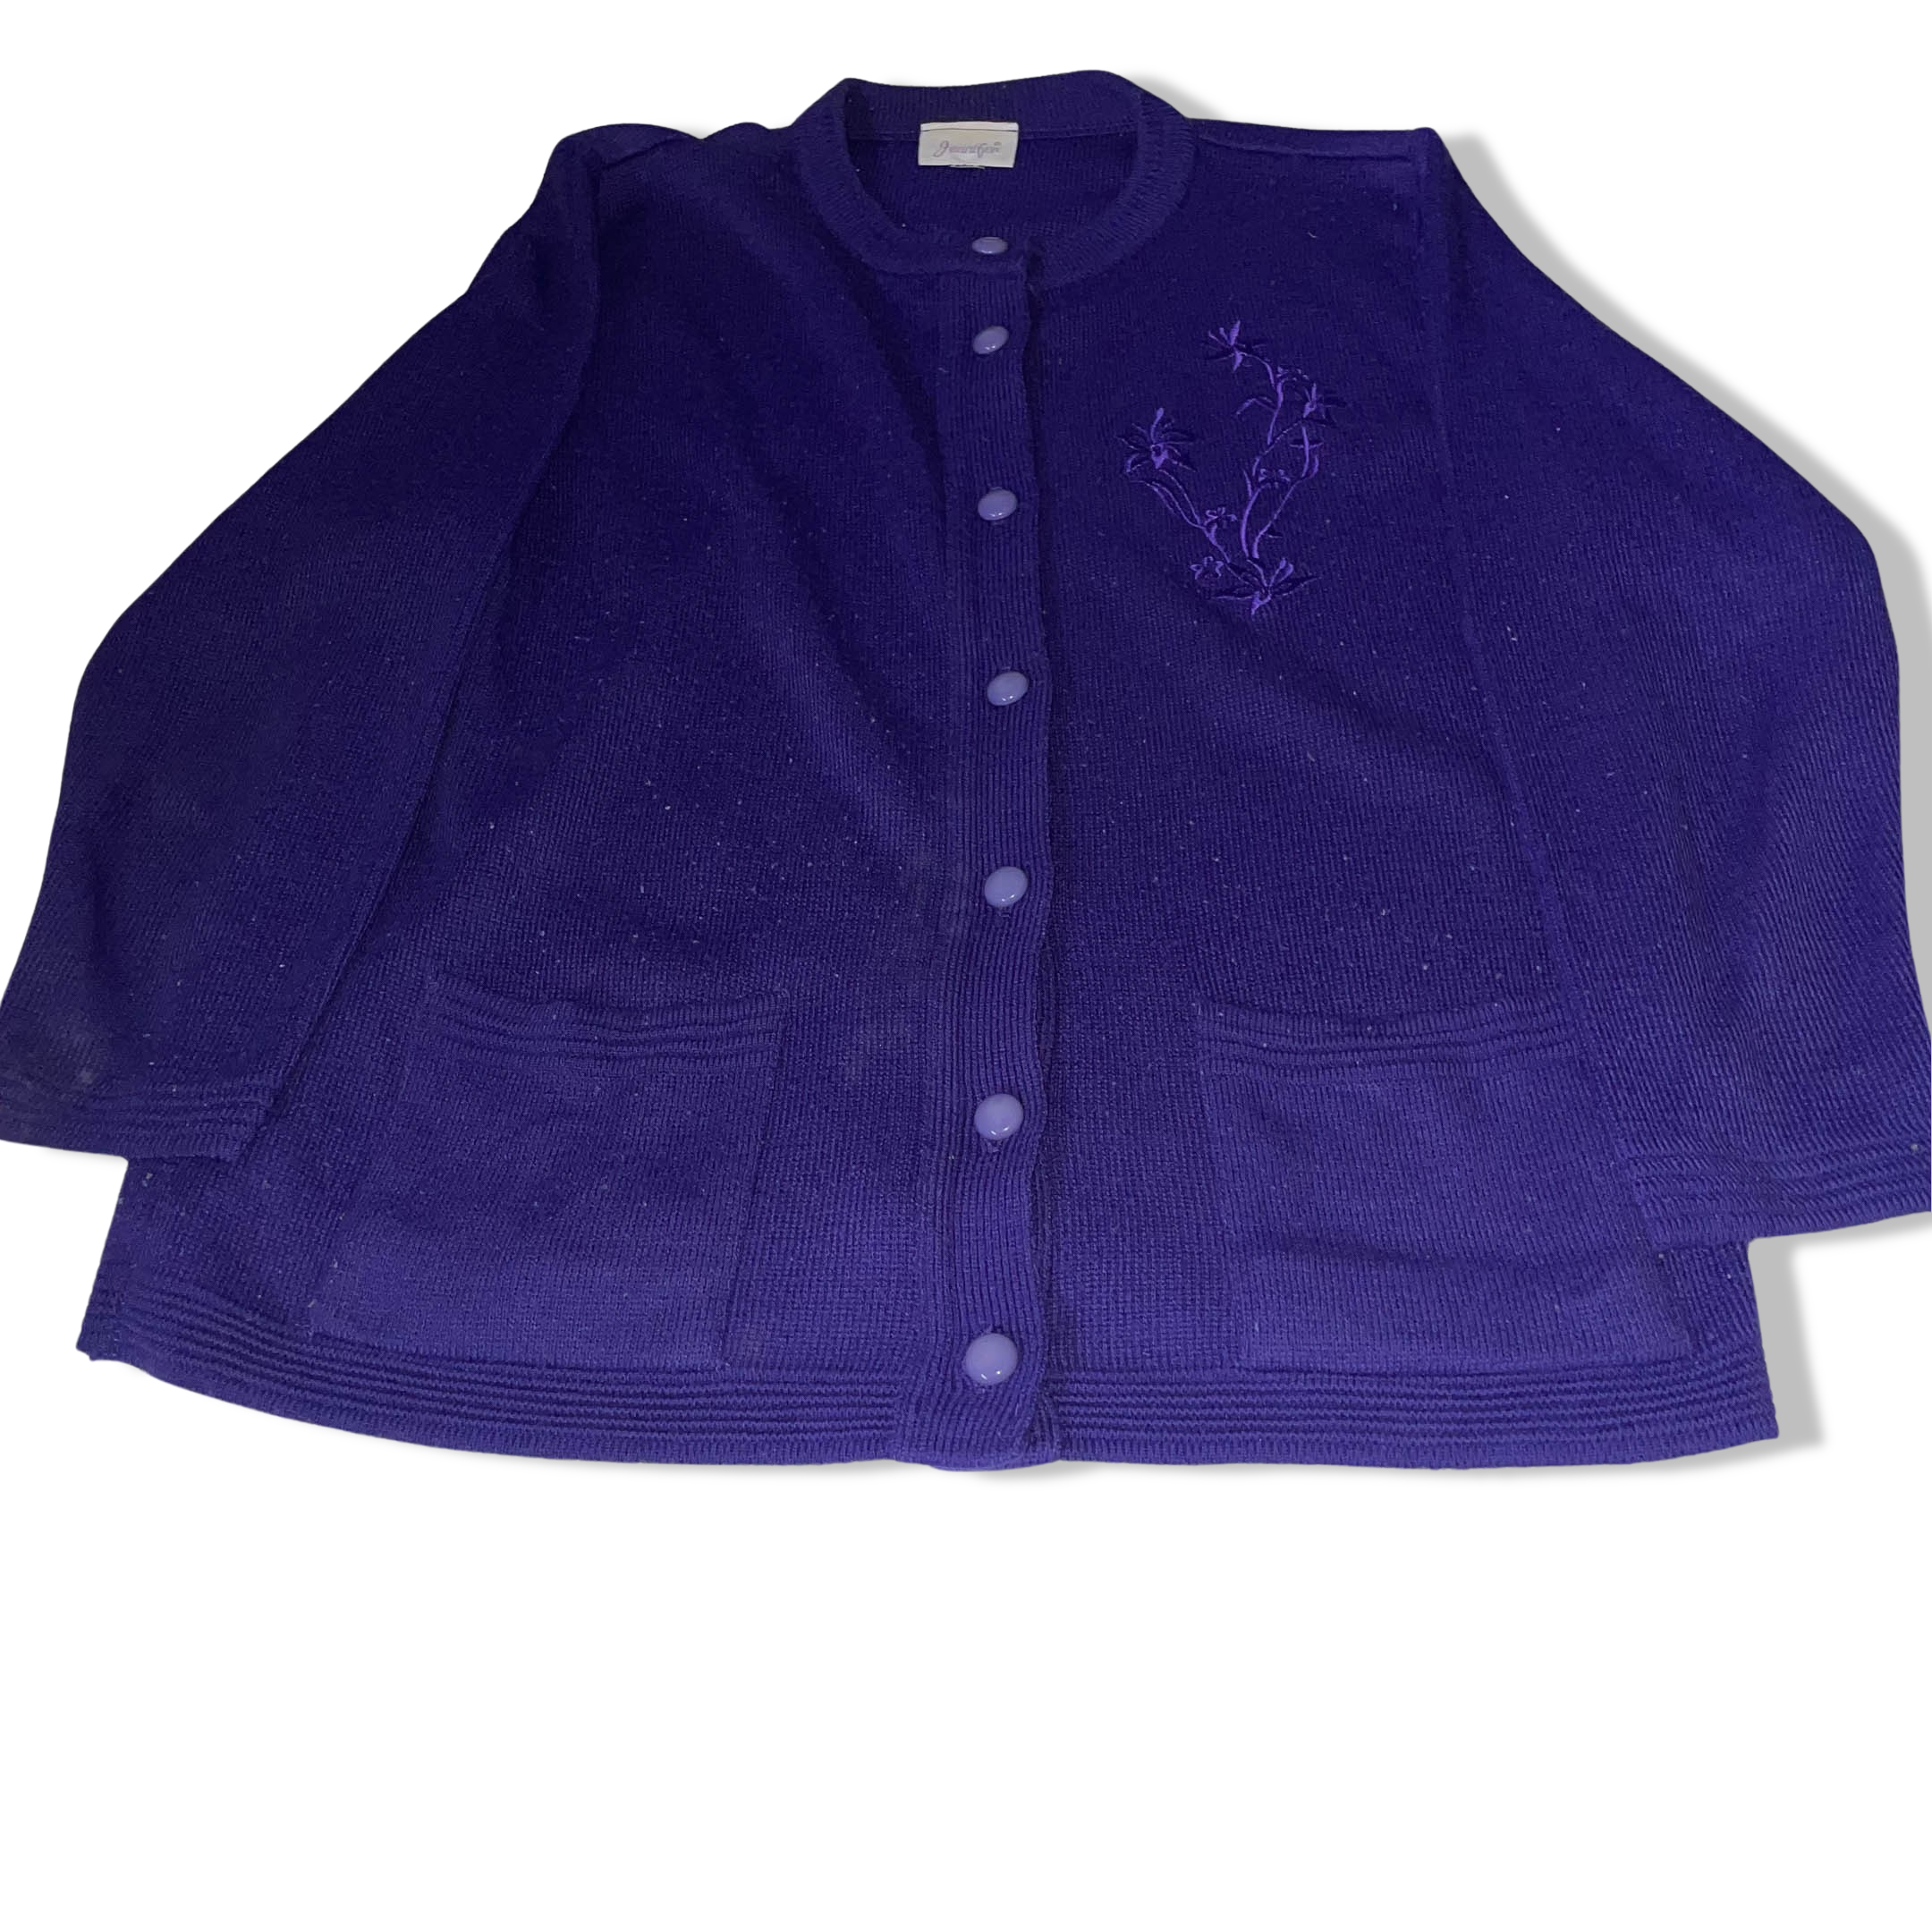 Vintage Jennifer button up twin pocket purple sweater size S/M